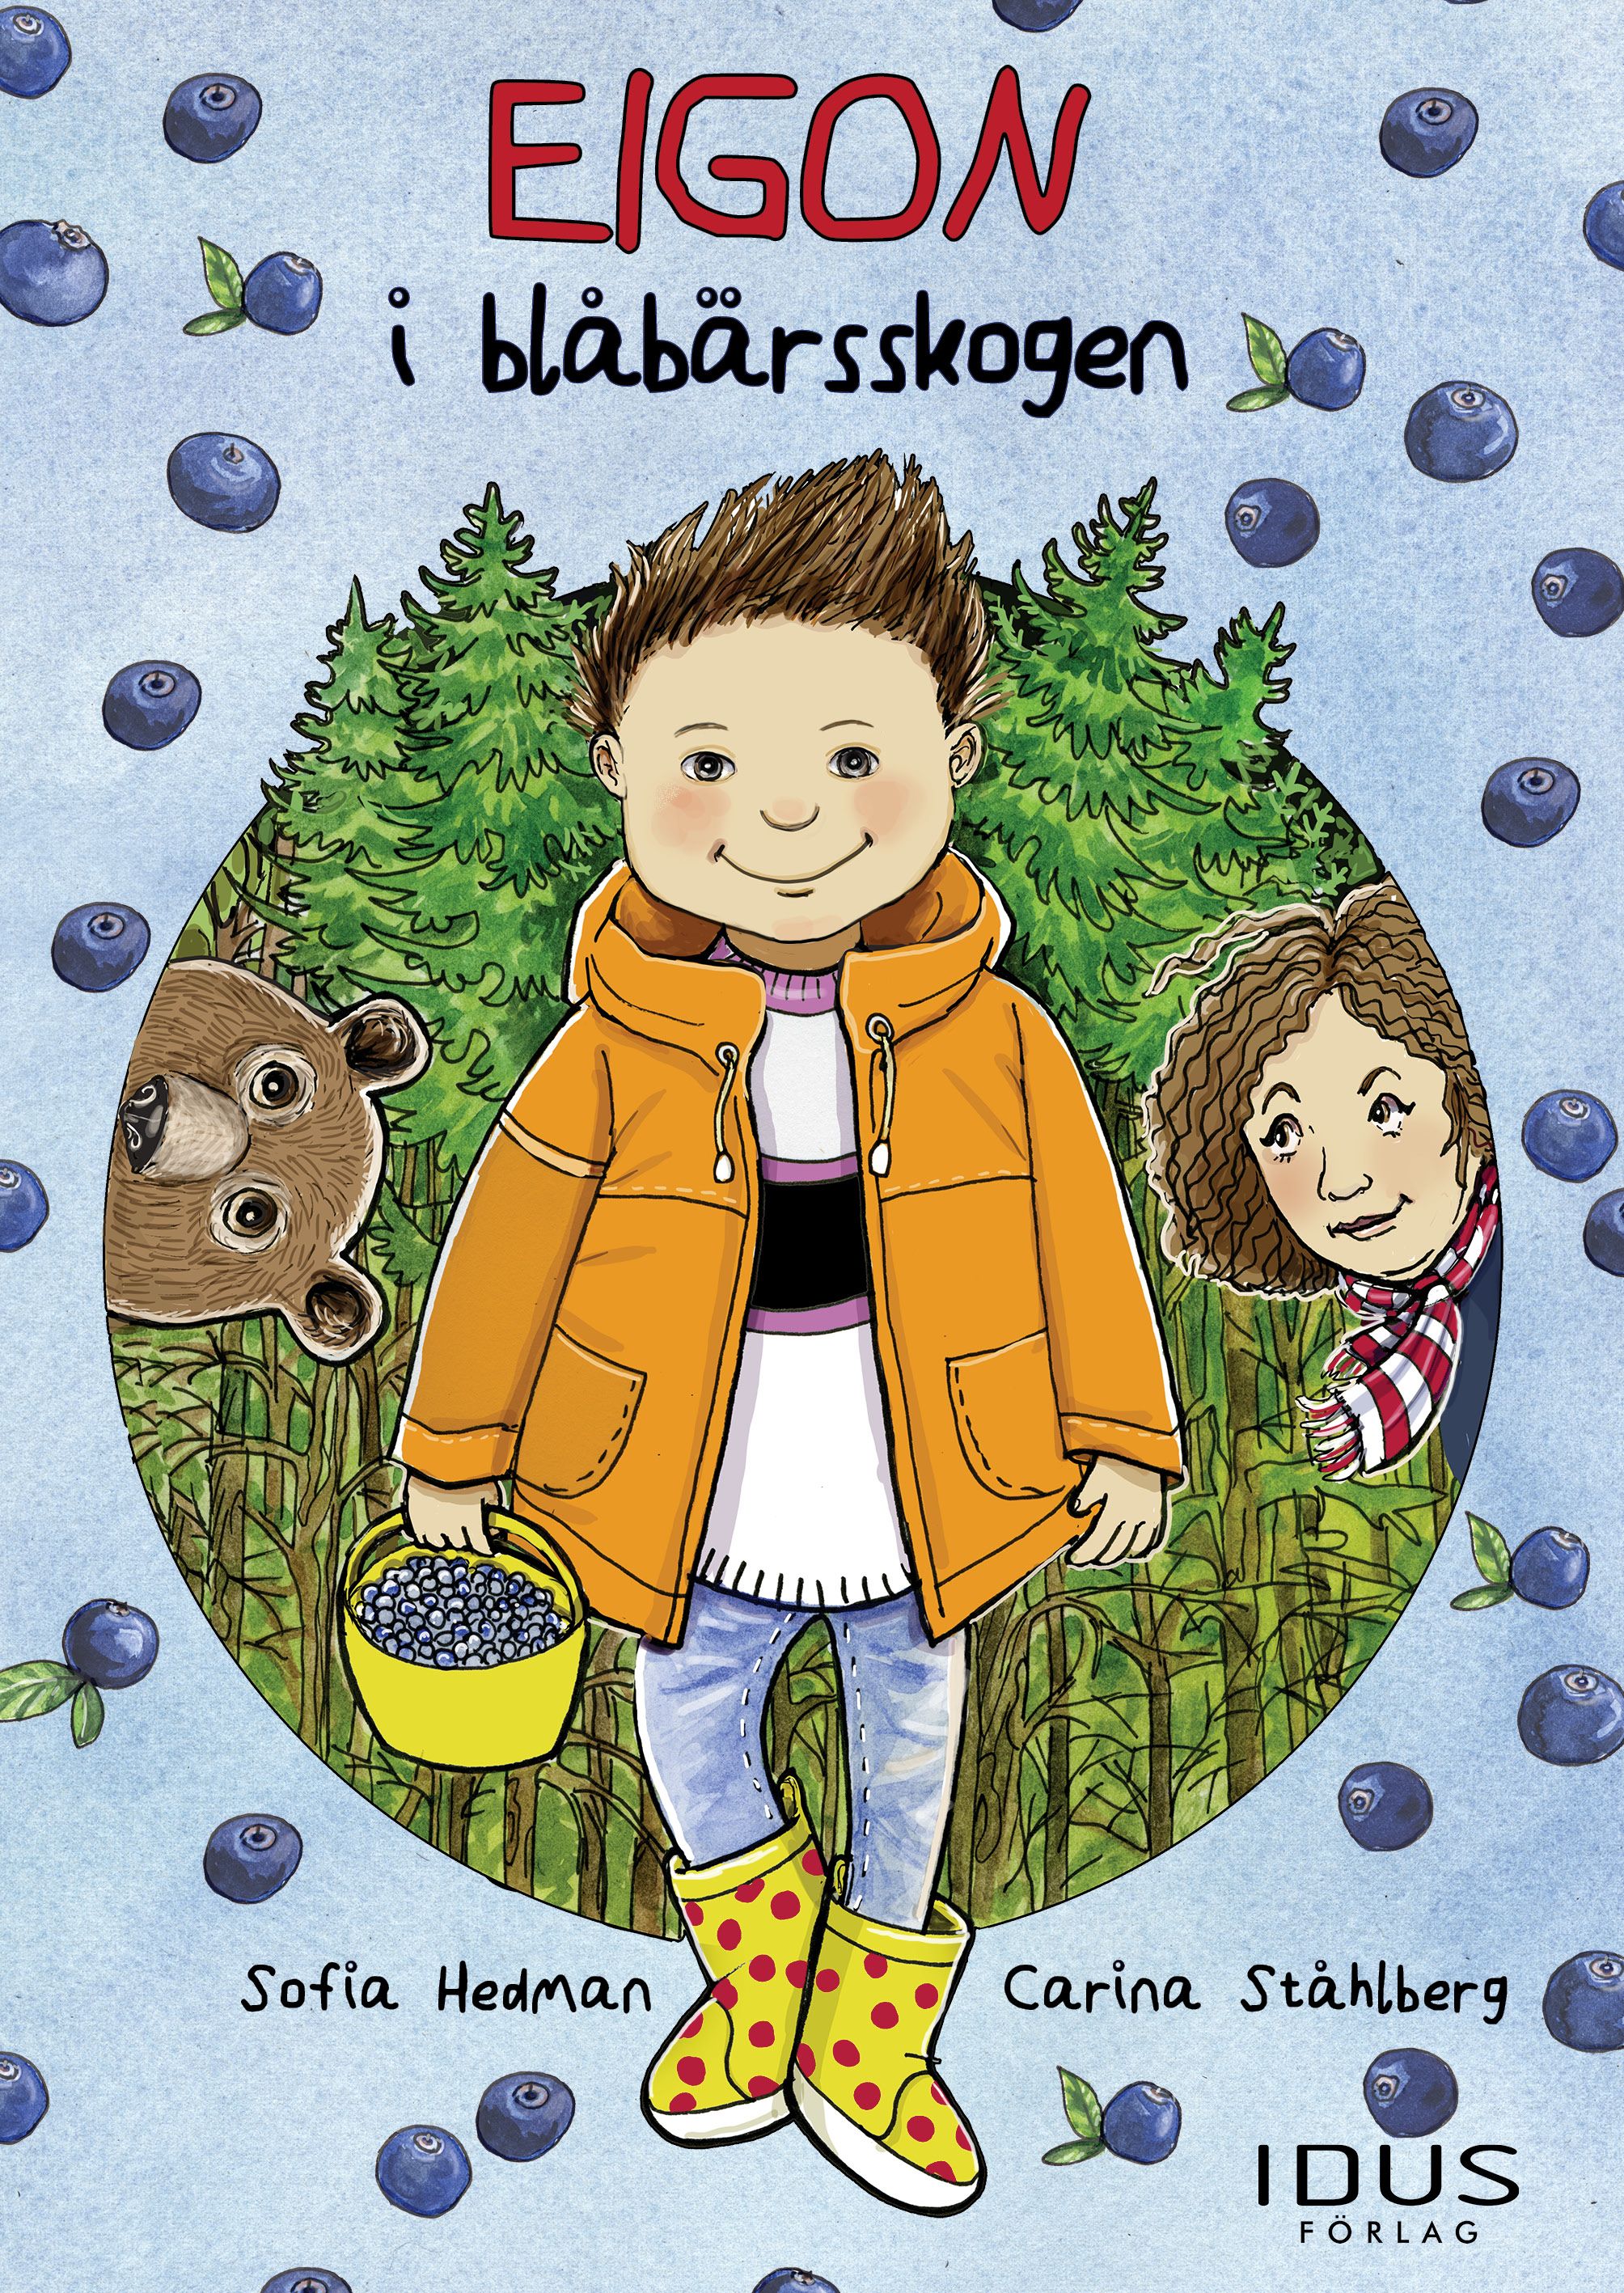 Eigon i blåbärsskogen, eBook by Sofia Hedman